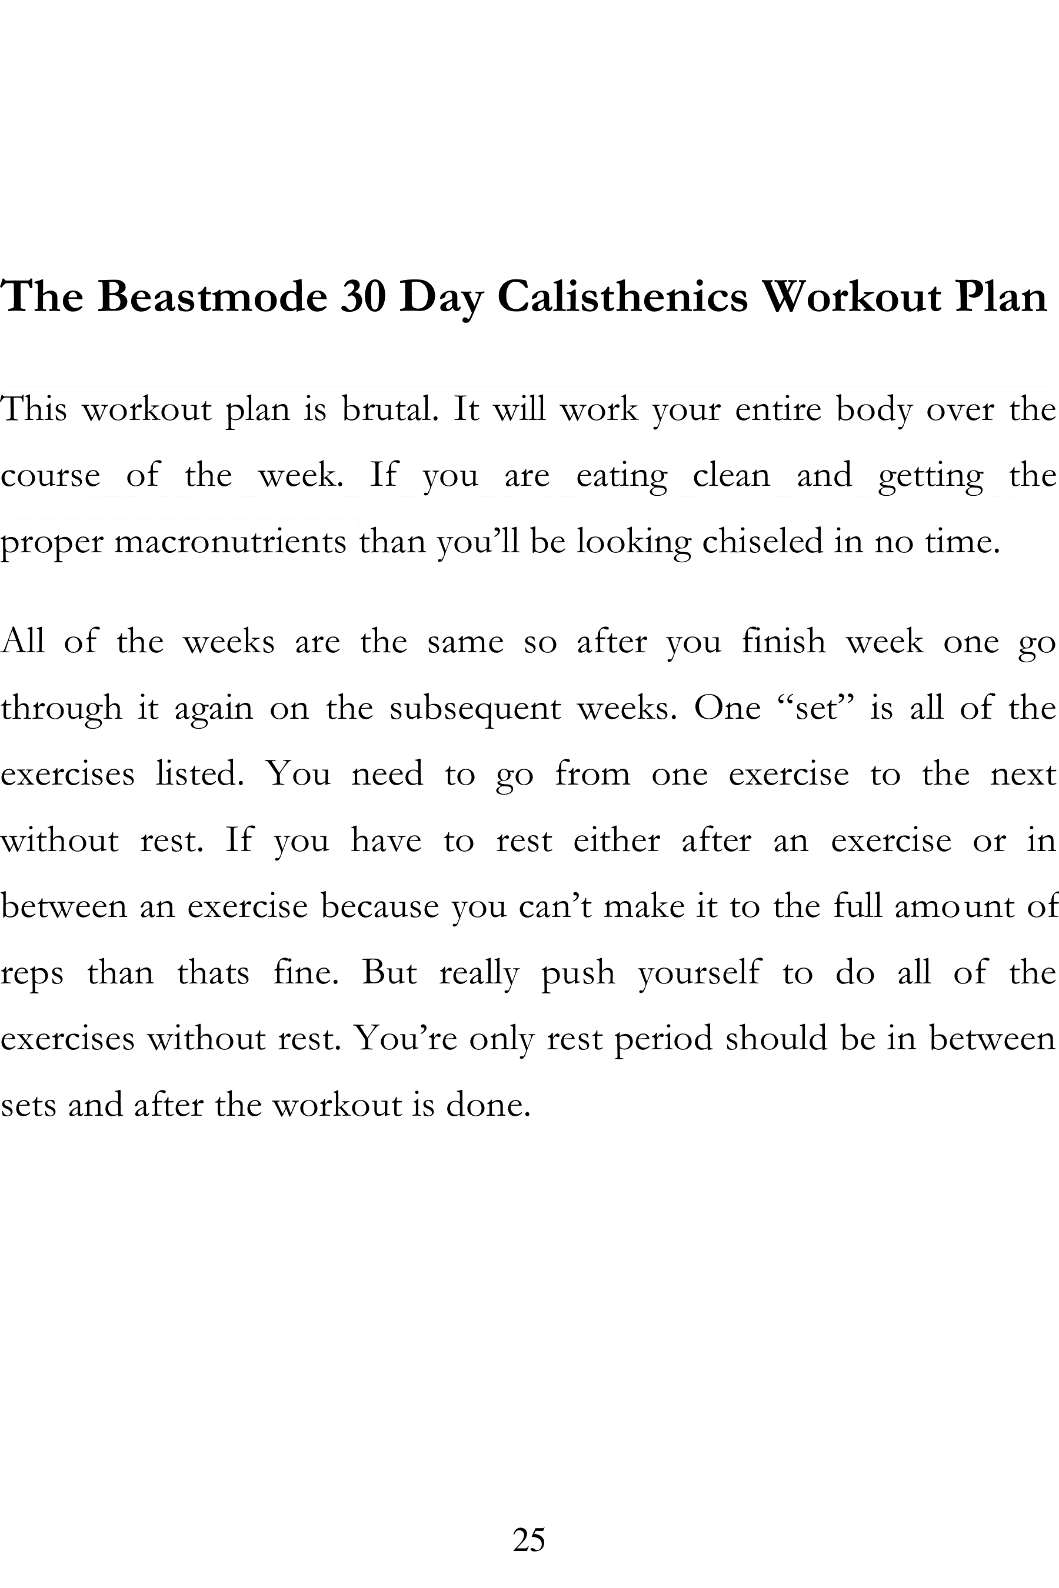 Calisthenics Workouts Health Benefits and Example Exercises - photo 27